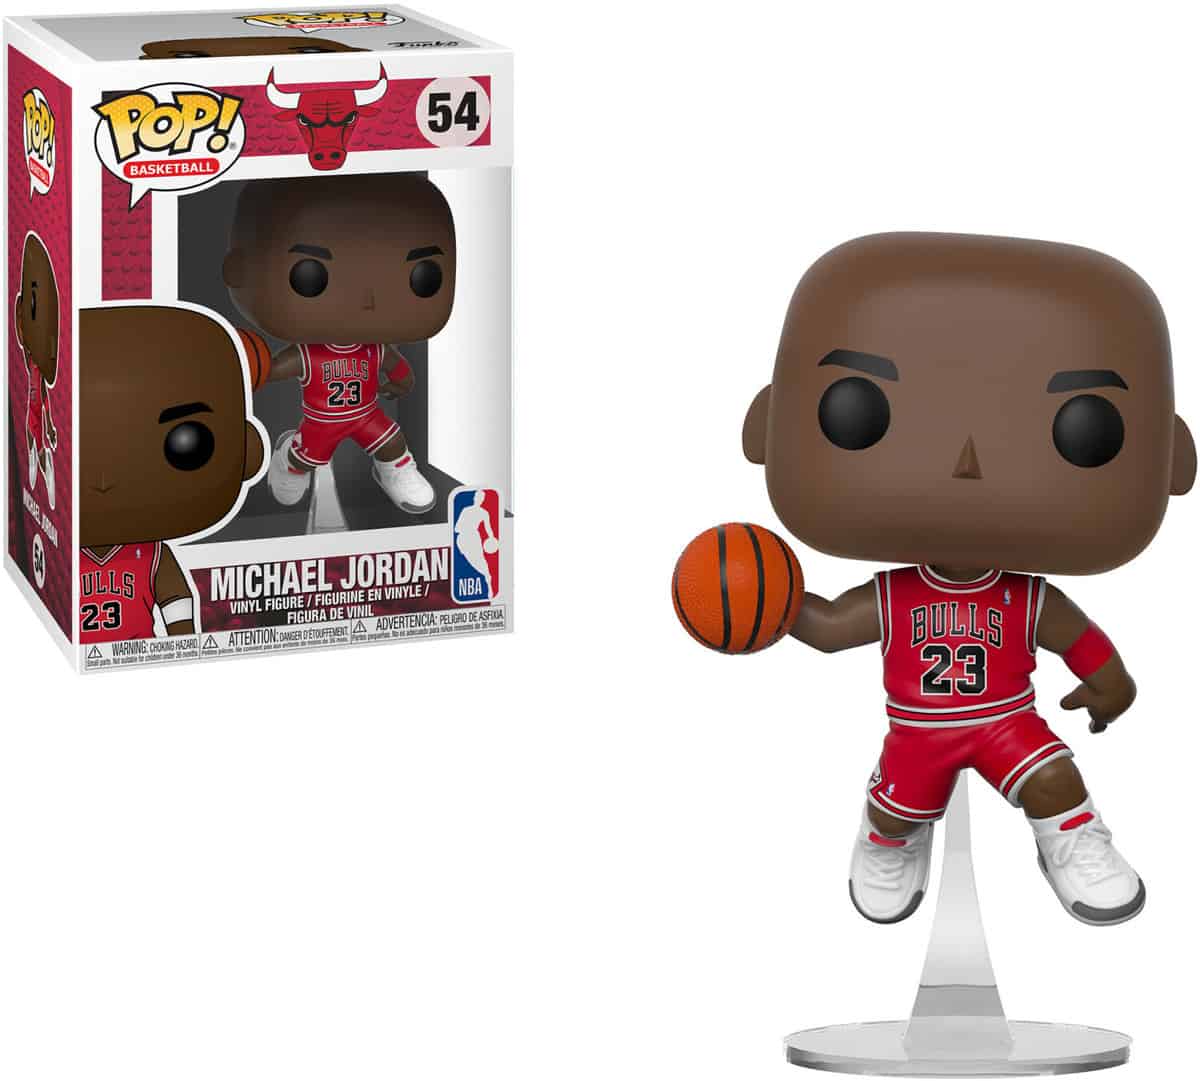 Funko Pop! Basketball: Chicago Bulls - Michael Jordan Figur - für 11,98 € inkl. Versand statt 14,94 €